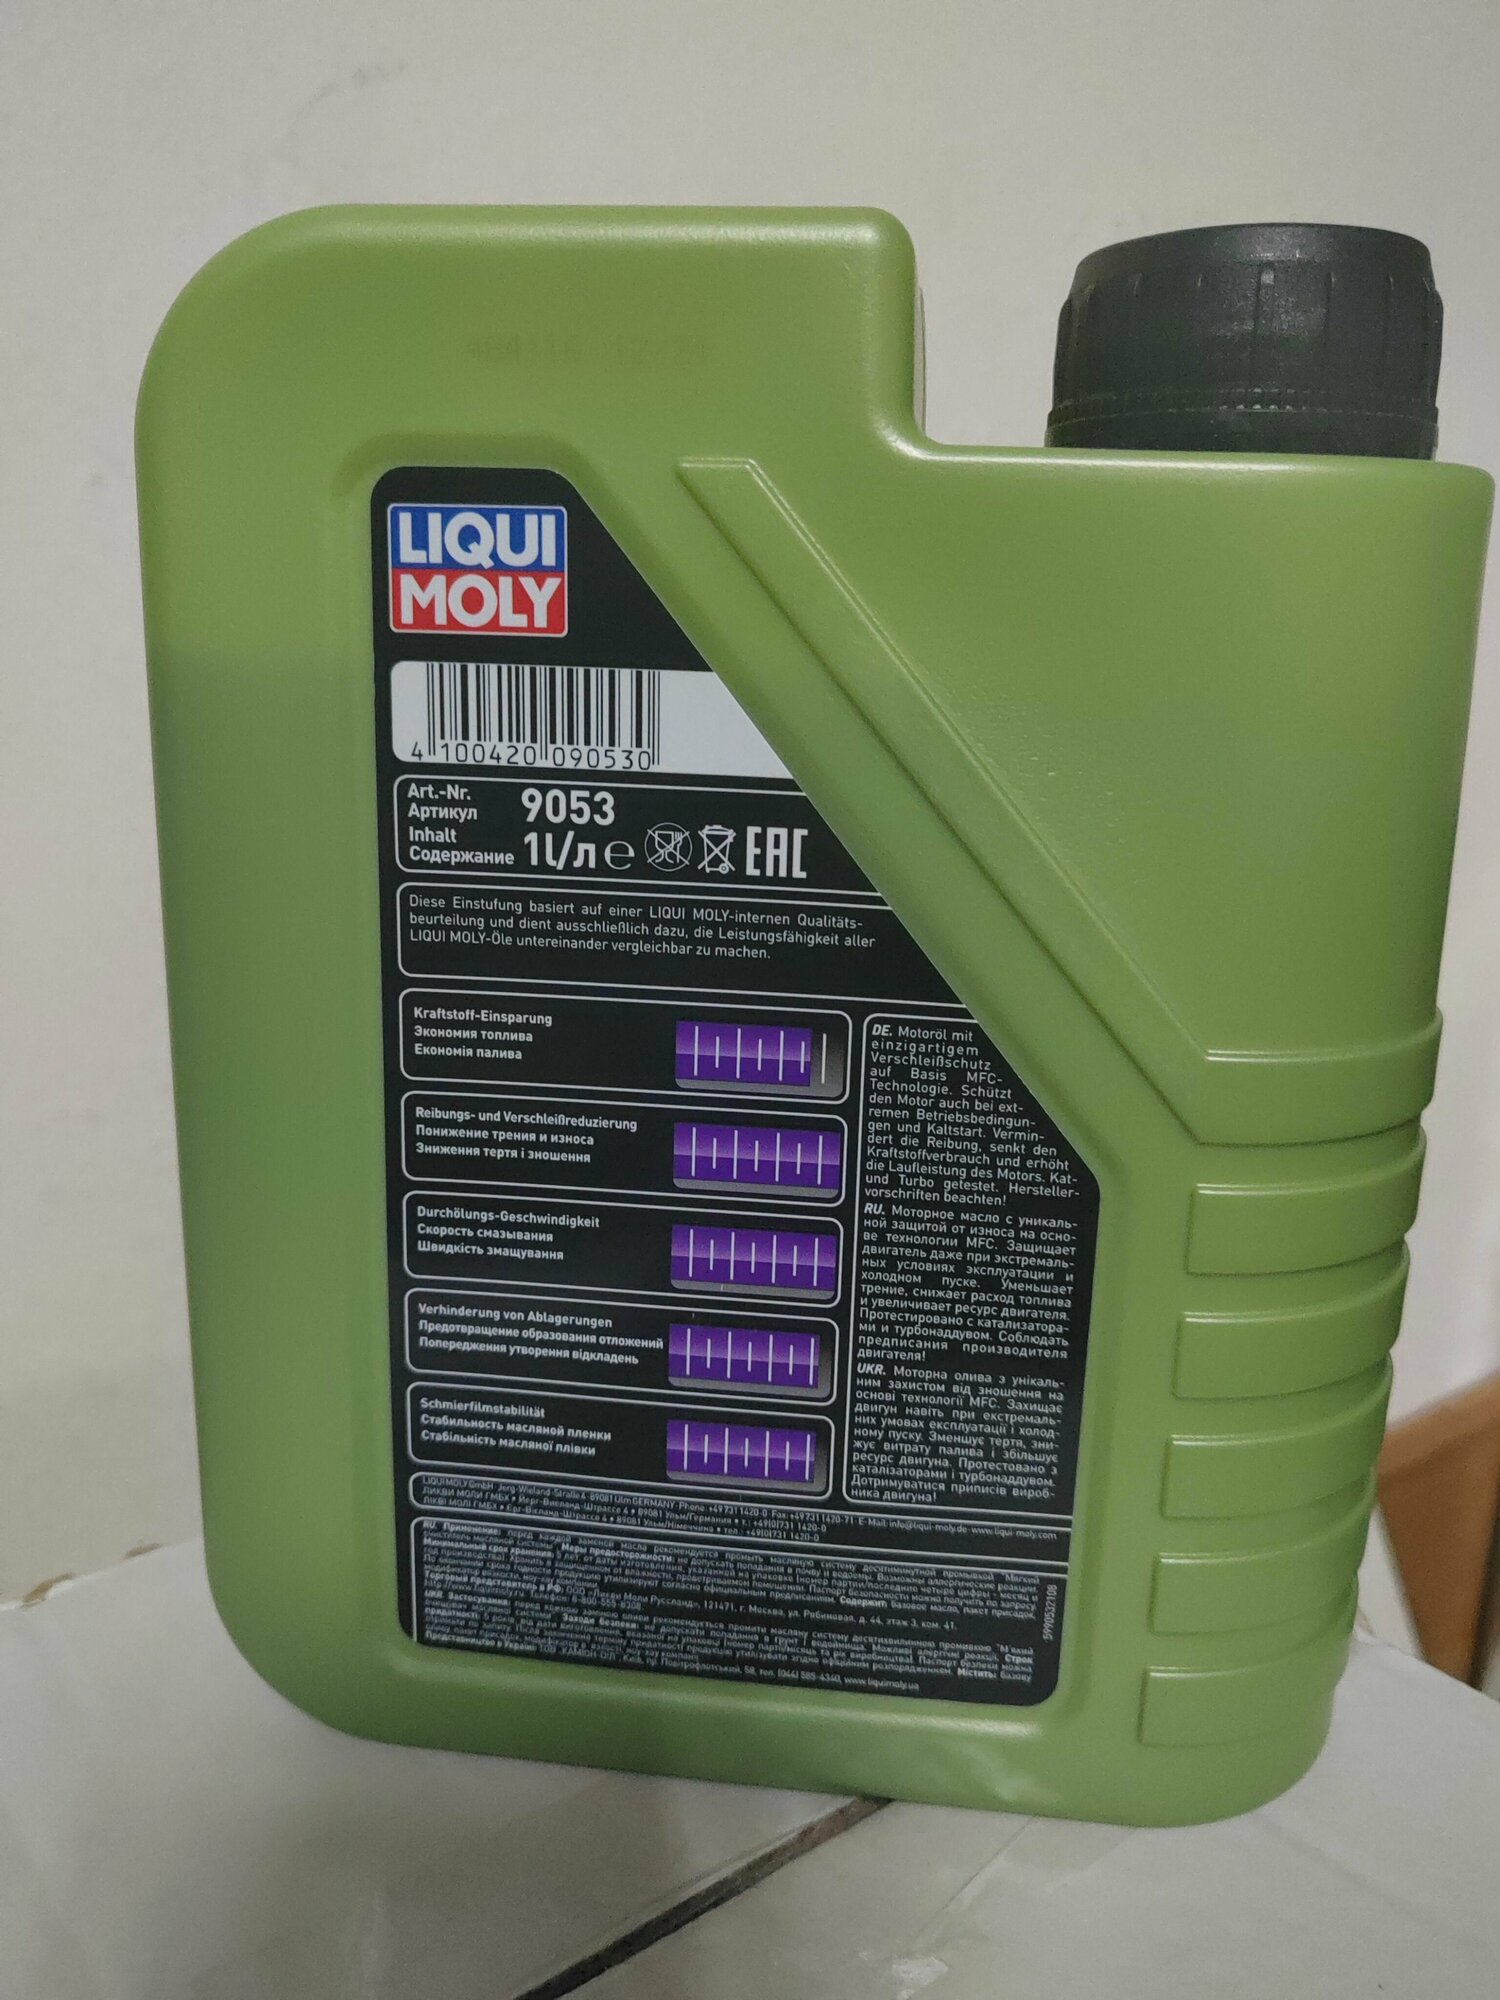 HC-синтетическое моторное масло LIQUI MOLY Molygen New Generation 5W-30